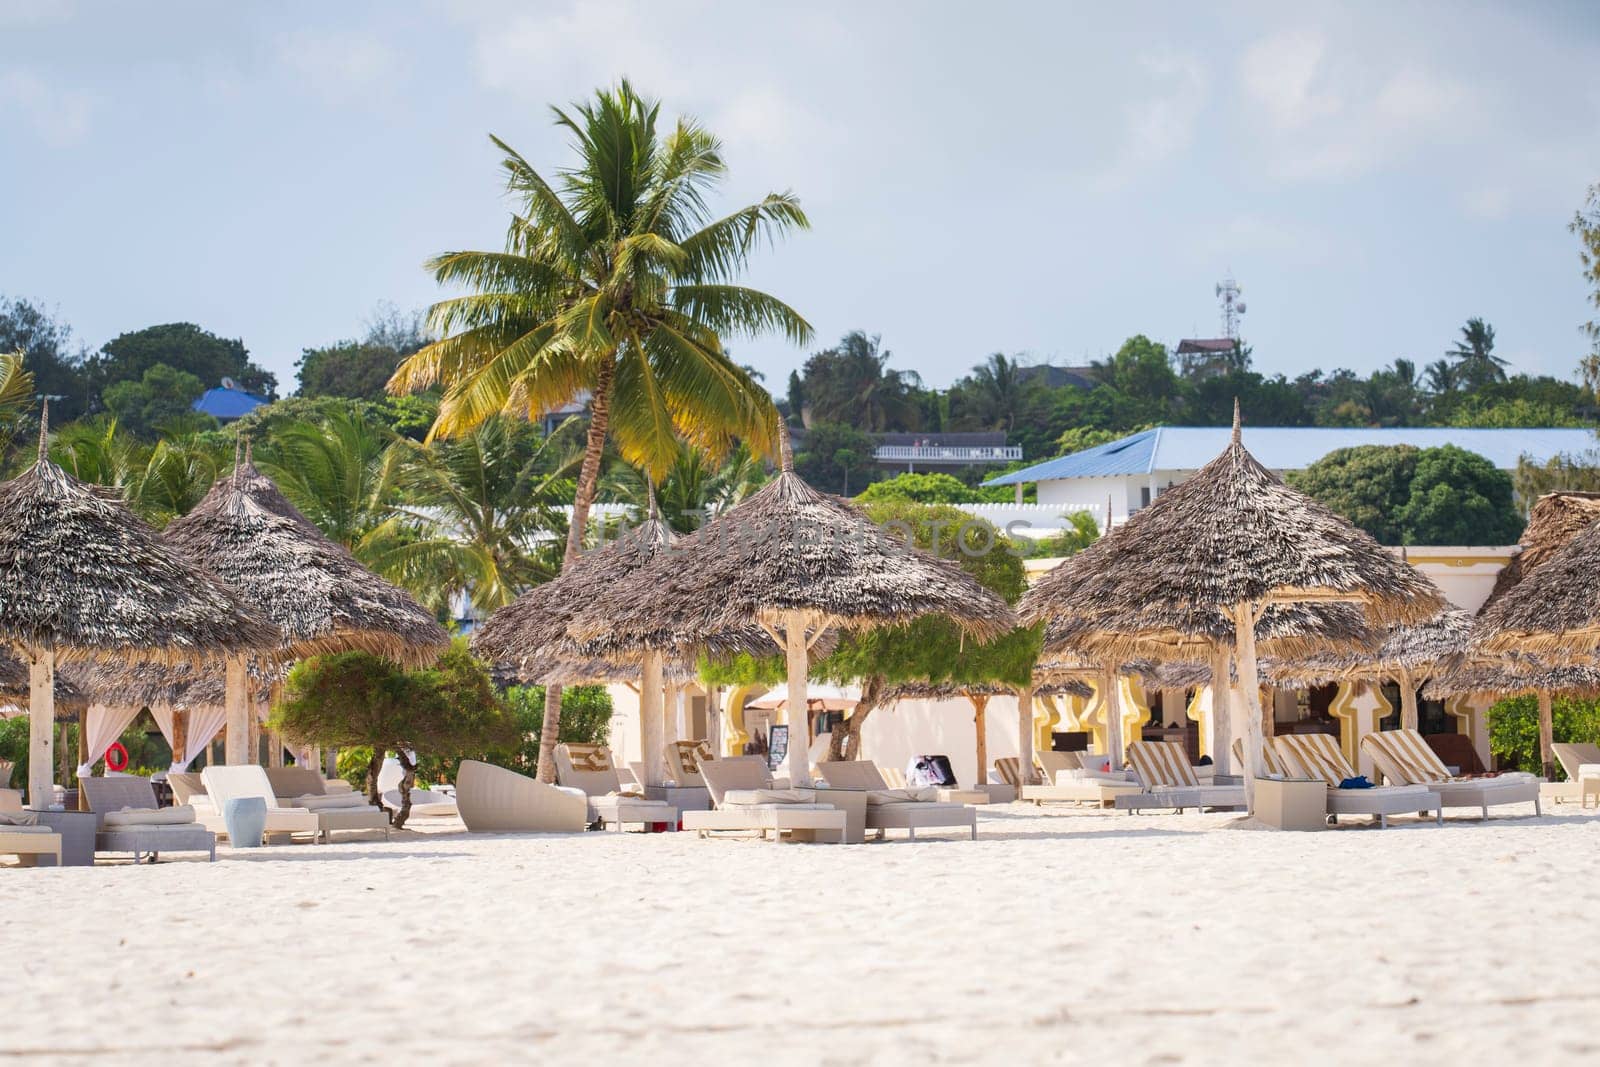 Luxury beach loungers and umbrella at luxurious beach resort by Robertobinetti70